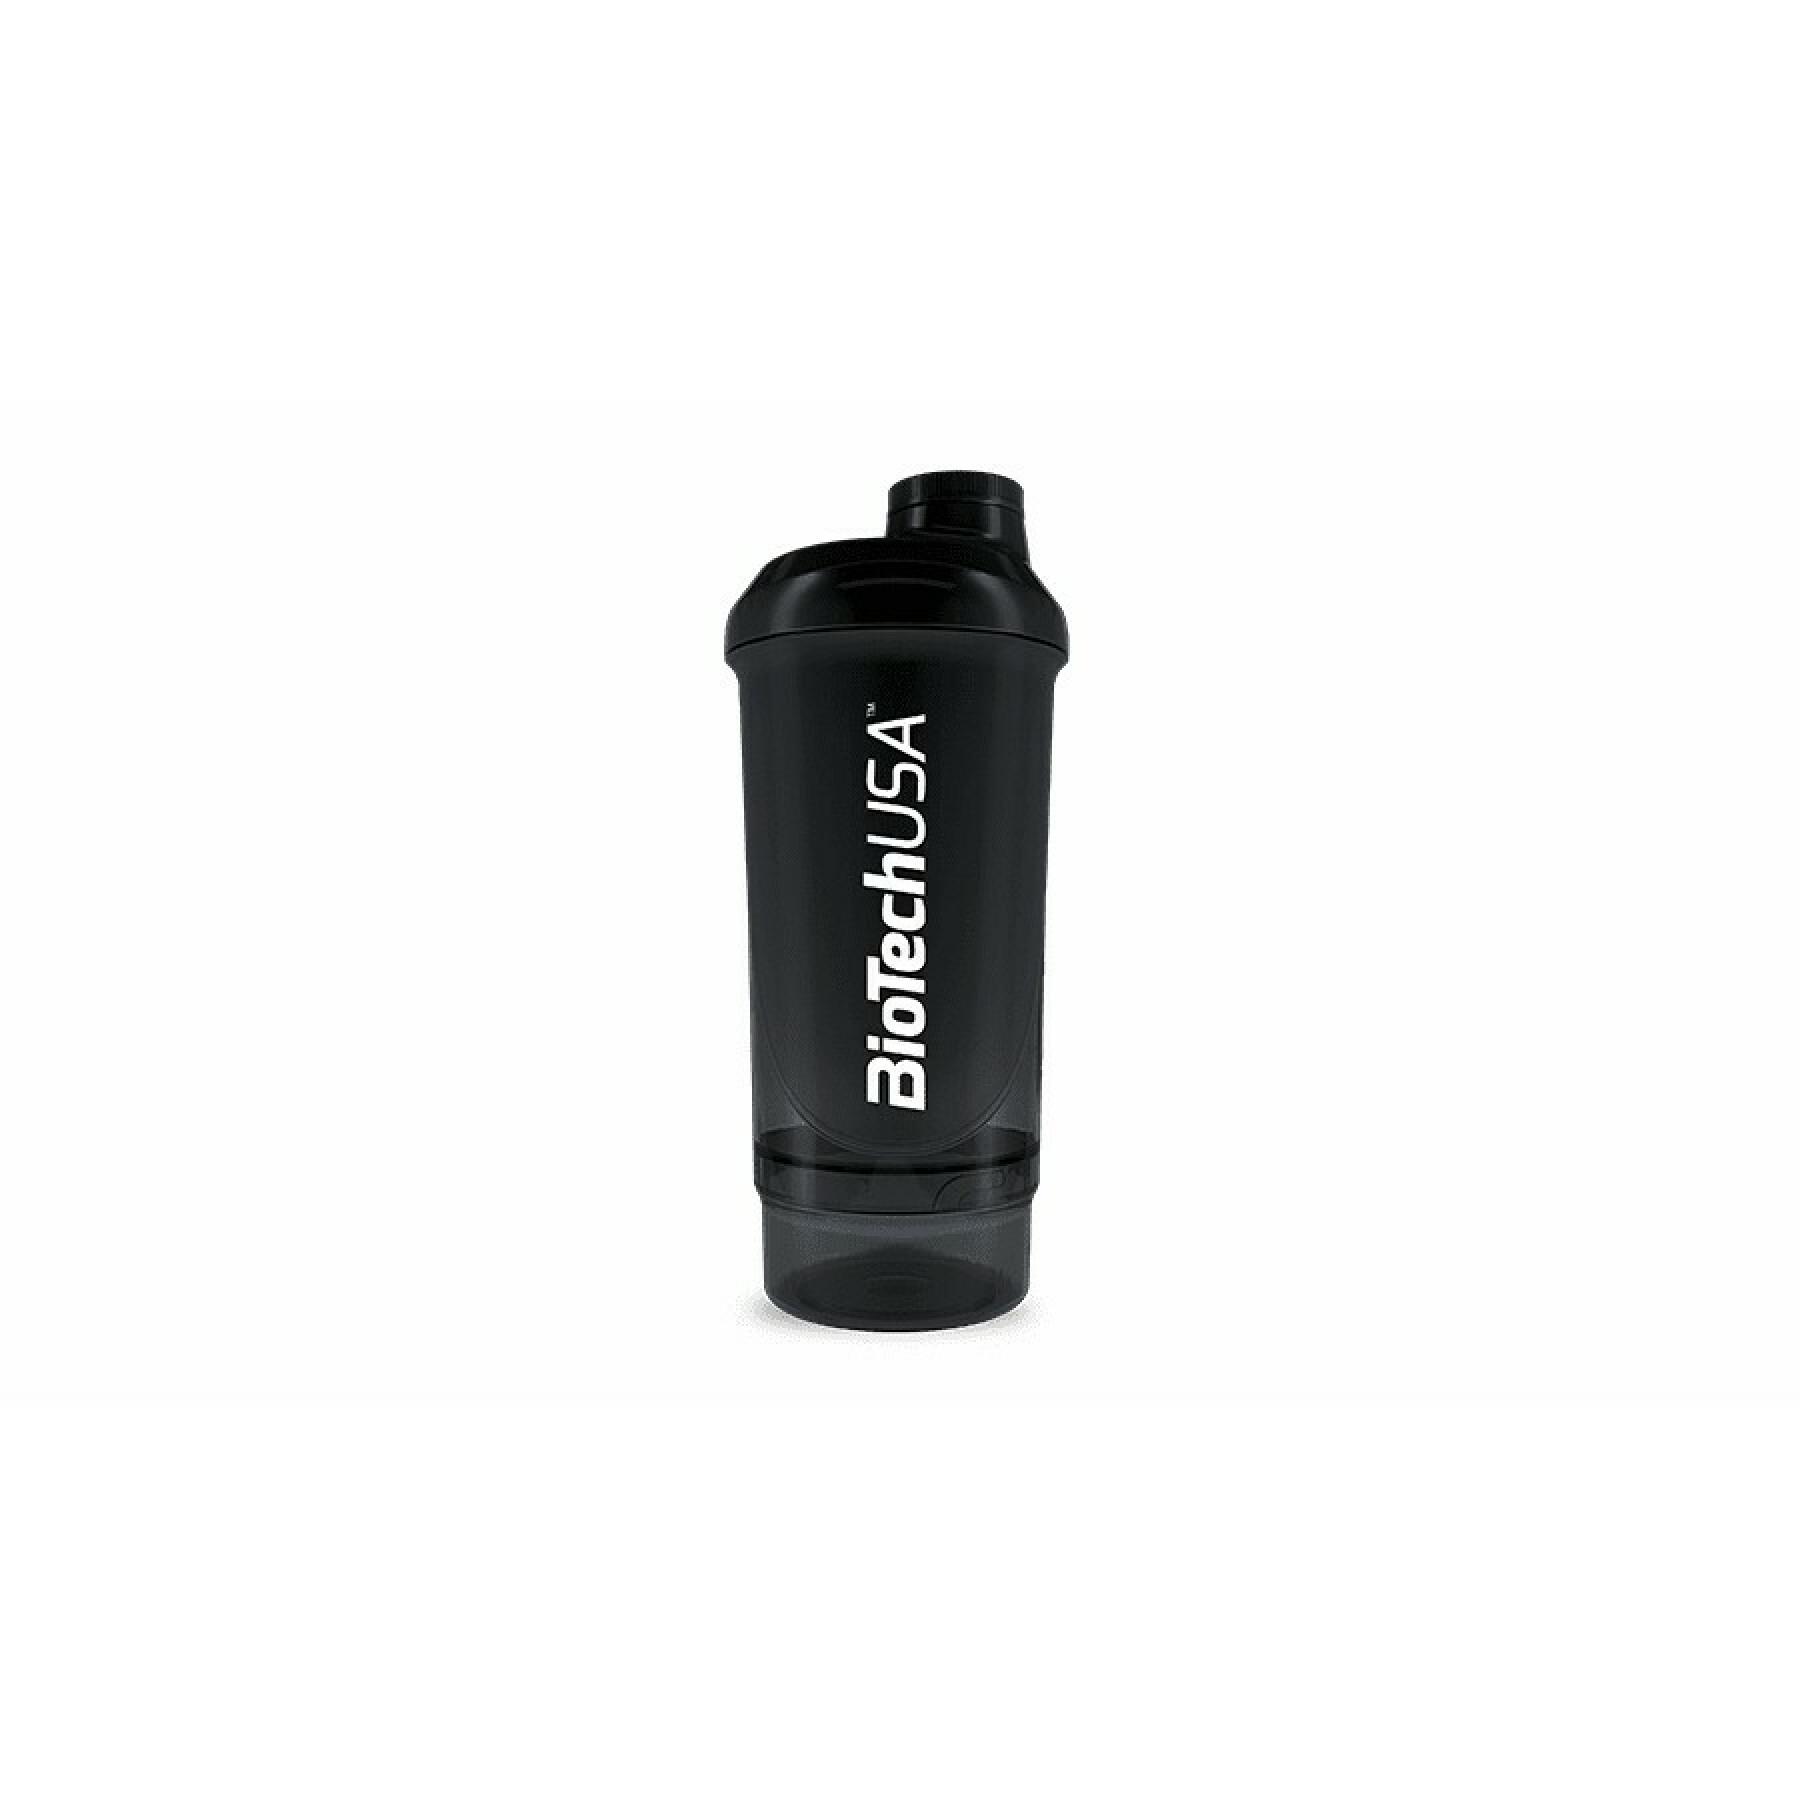 Set aus 68 Shakern Biotech USA wave+compact shaker - 500ml